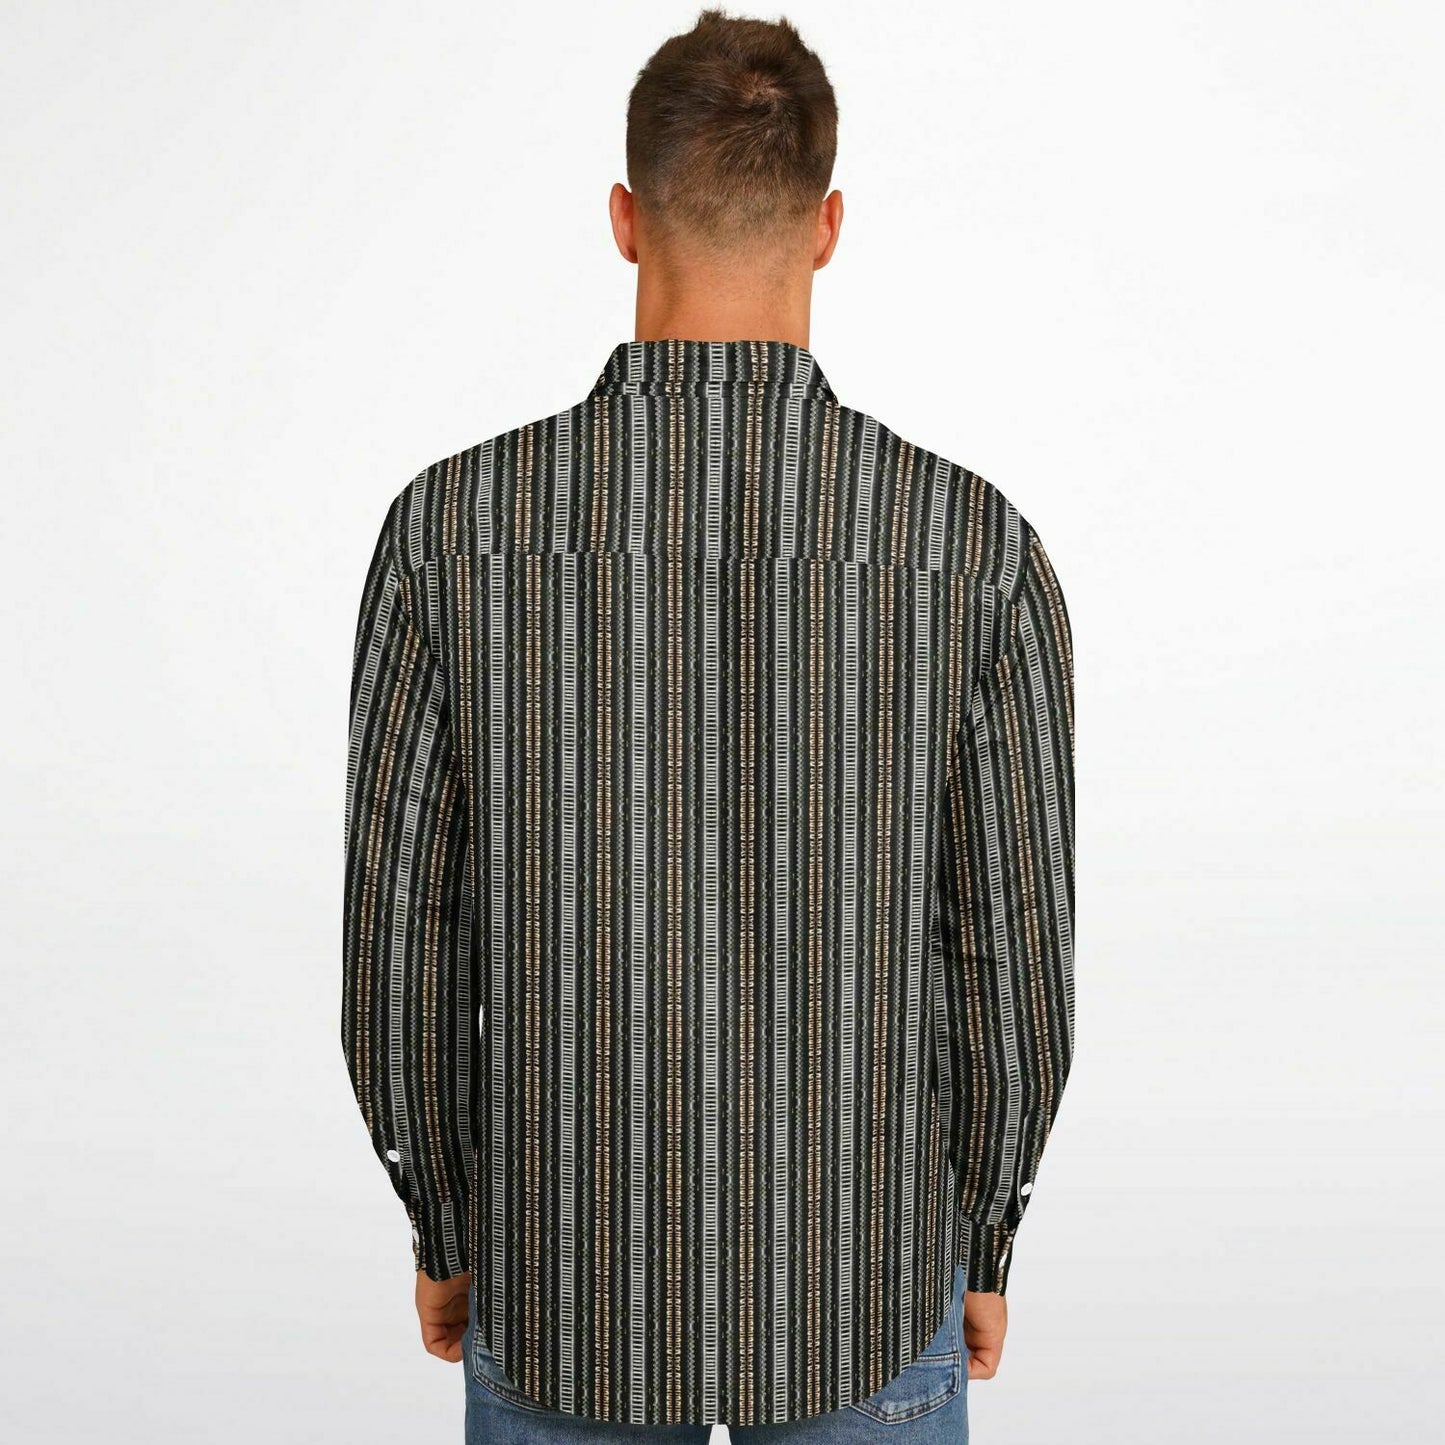 Long Sleeve Button Down Shirt (Black & Tan No. 1)